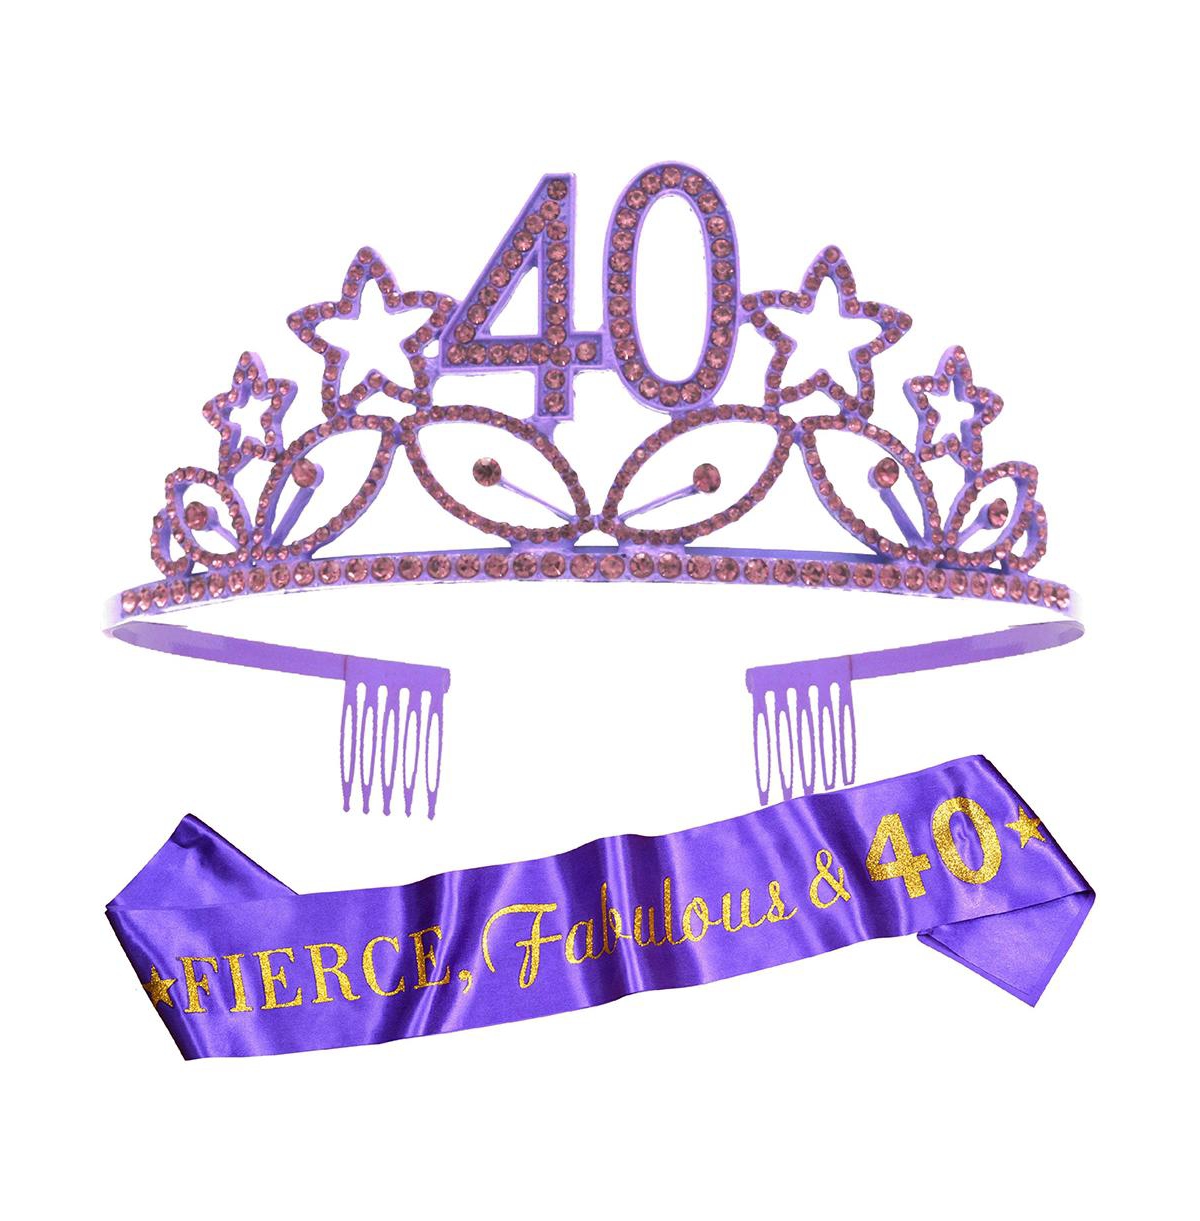 40th Birthday Sash and Tiara Set for Women - Glittery Purple Sash with Stars and Rhinestone Premium Metal Tiara, Perfect for Celebrating Her 40th Birt